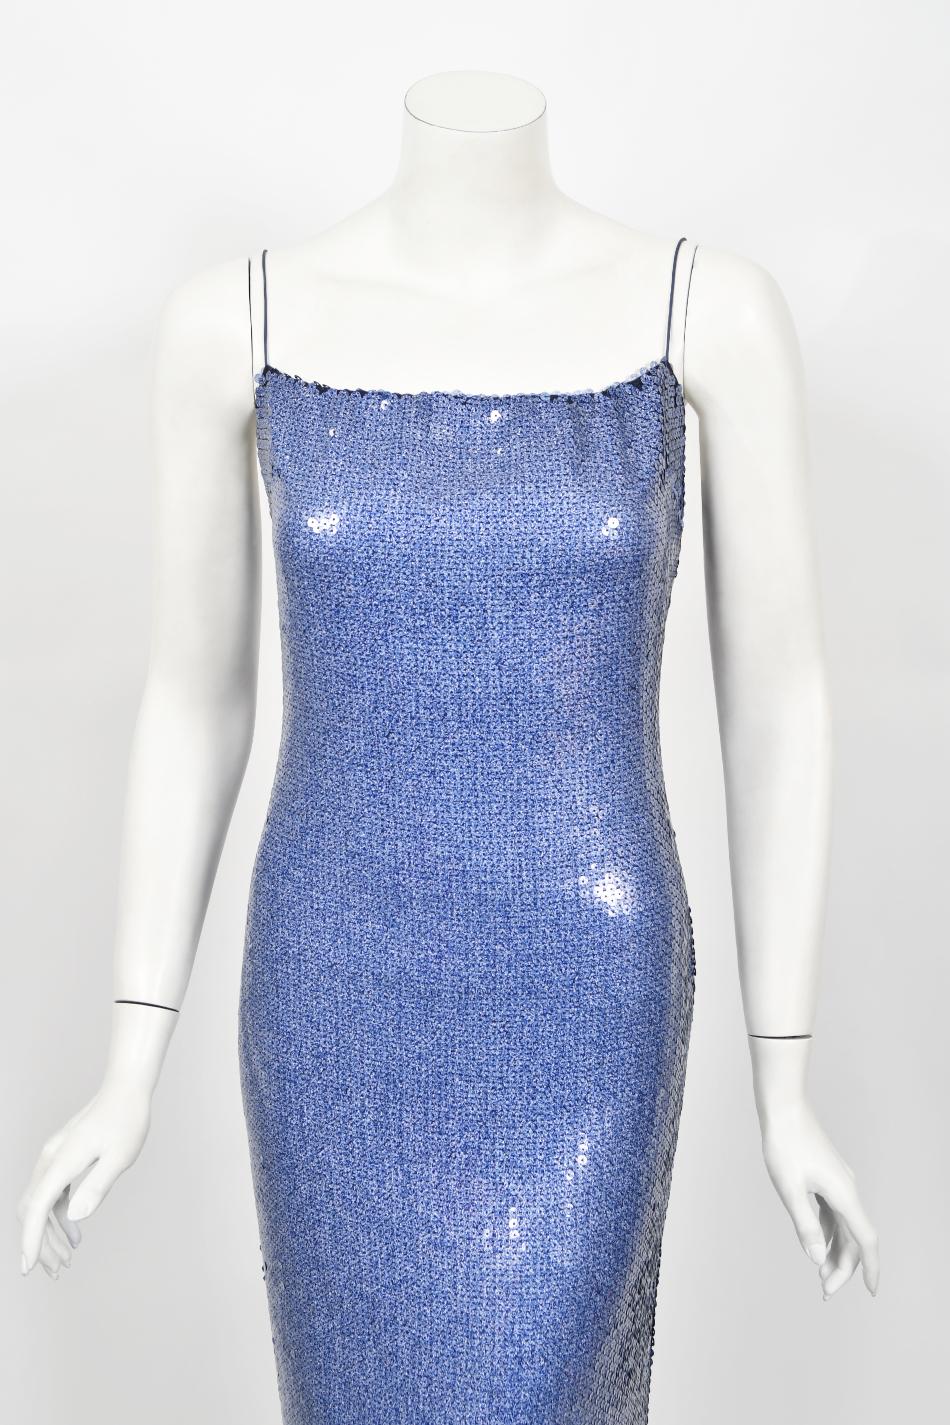 Women's 2000 Christian Dior by John Galliano Fully-Sequin Ocean Blue Bias-Cut Slip Gown 